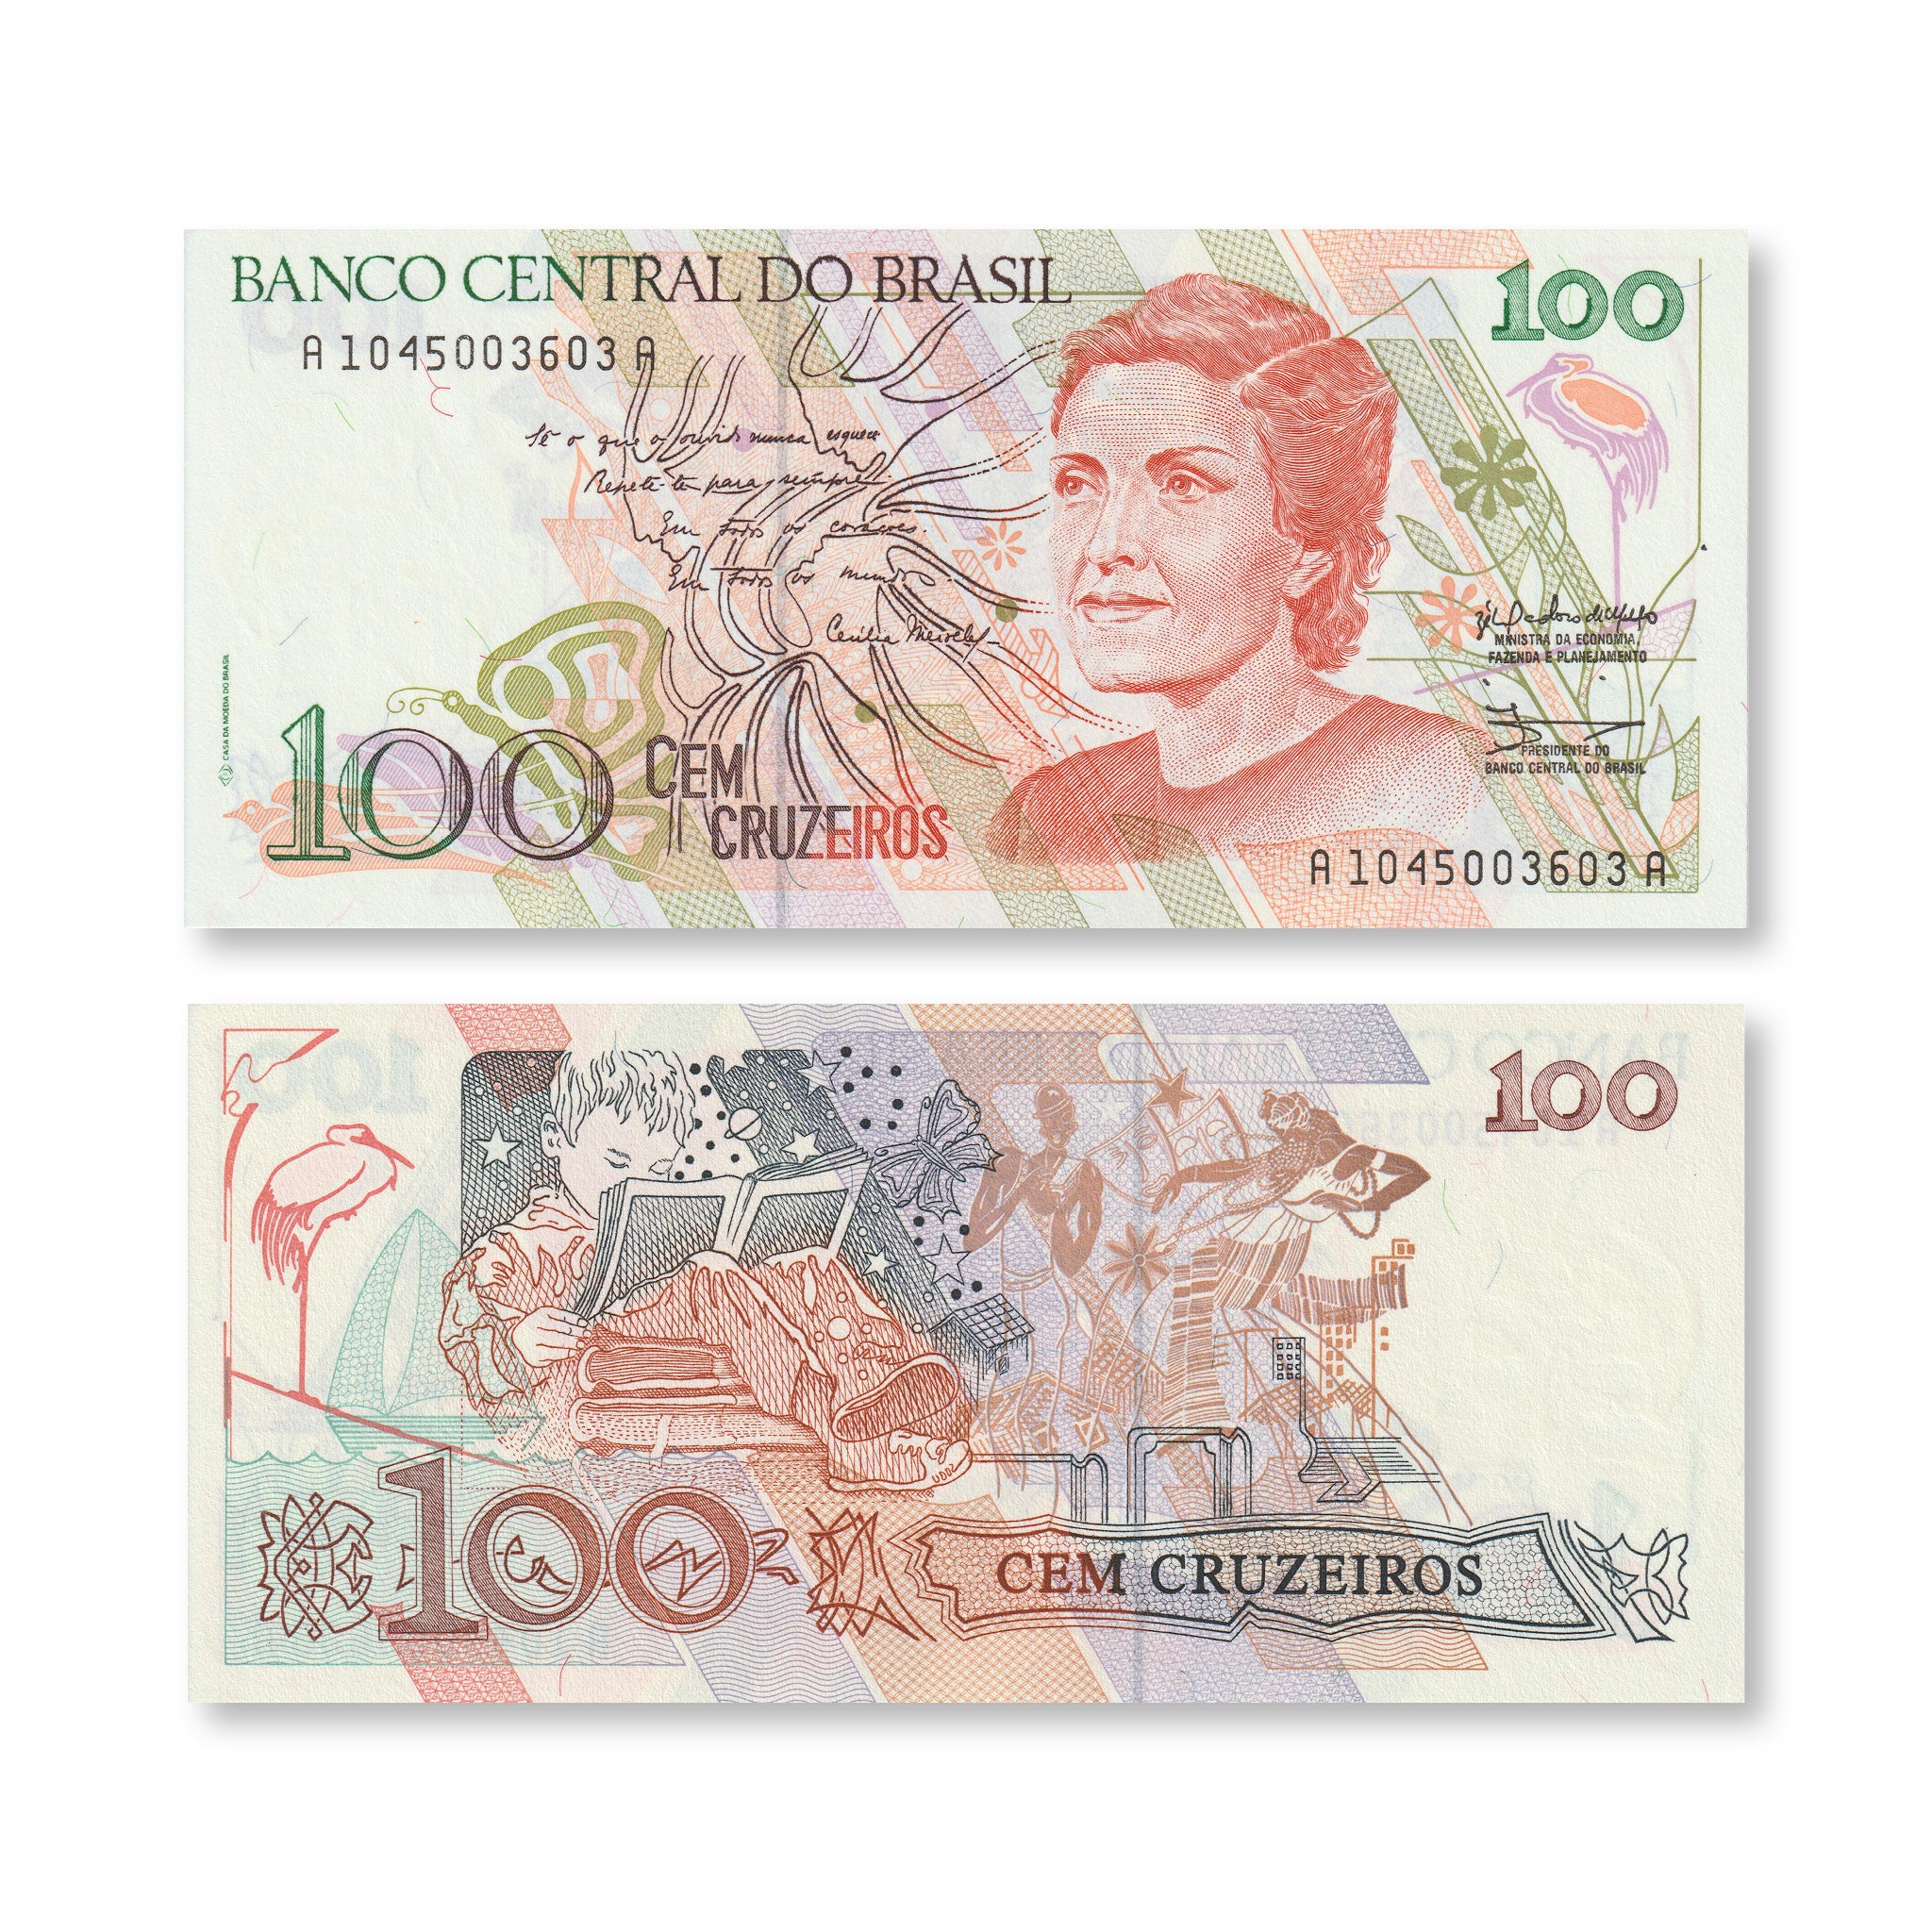 Brazil 100 Cruzeiros, 1990, B850a, P228, UNC - Robert's World Money - World Banknotes